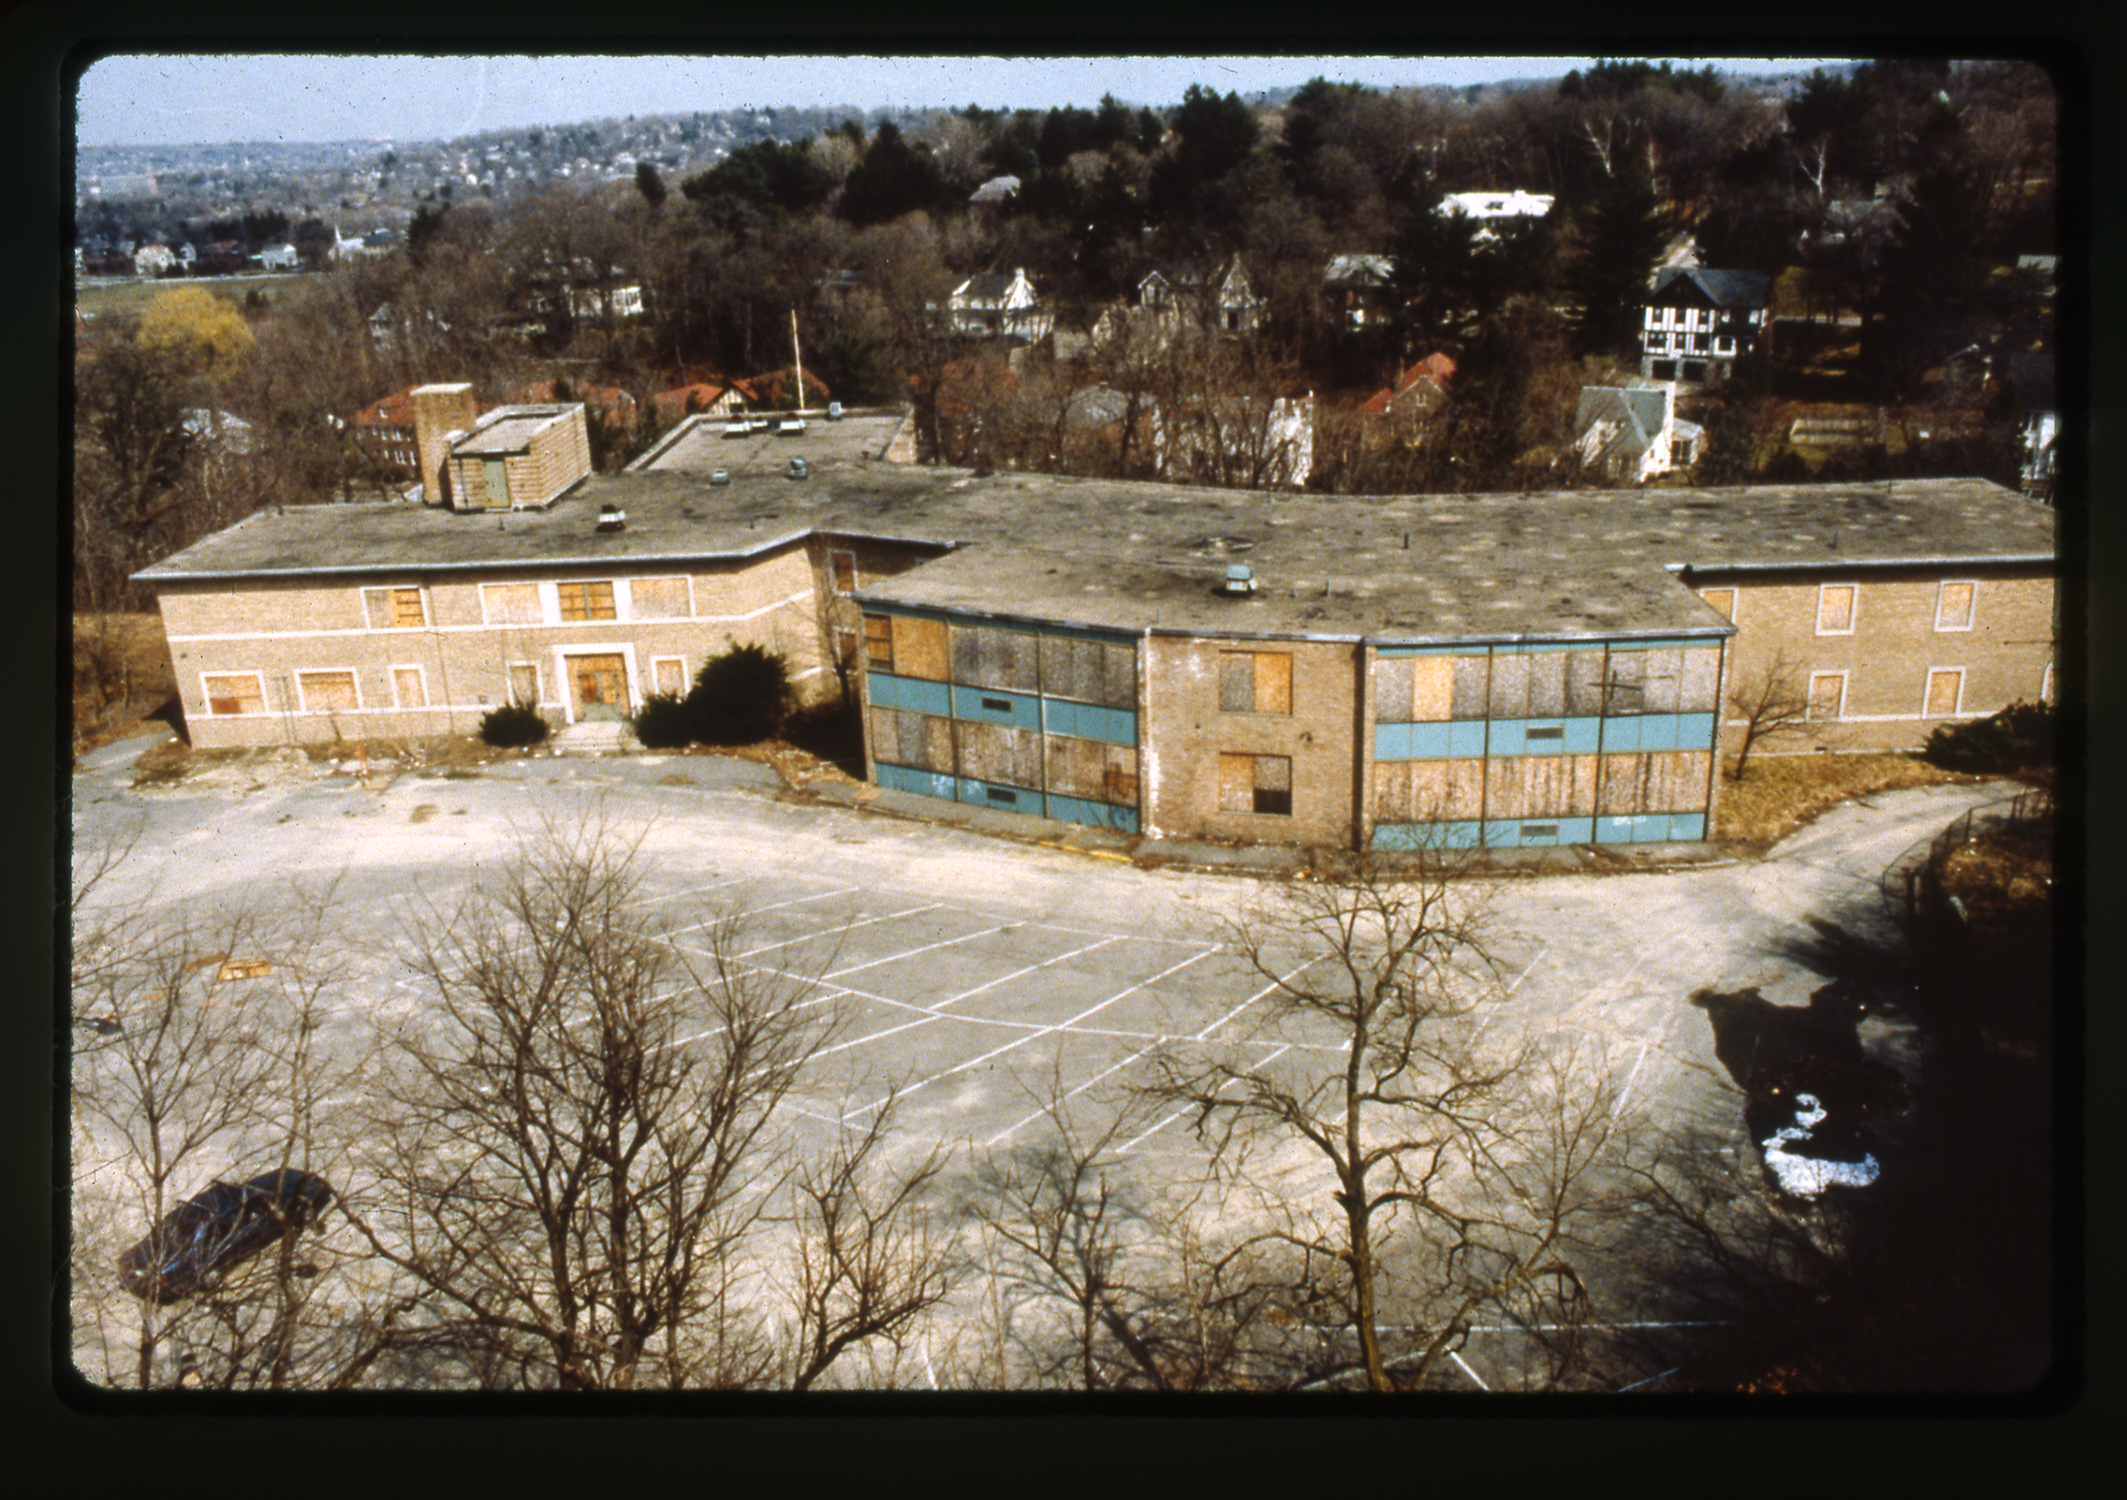 ABANDONED CLAFLIN SCHOOL, 1986